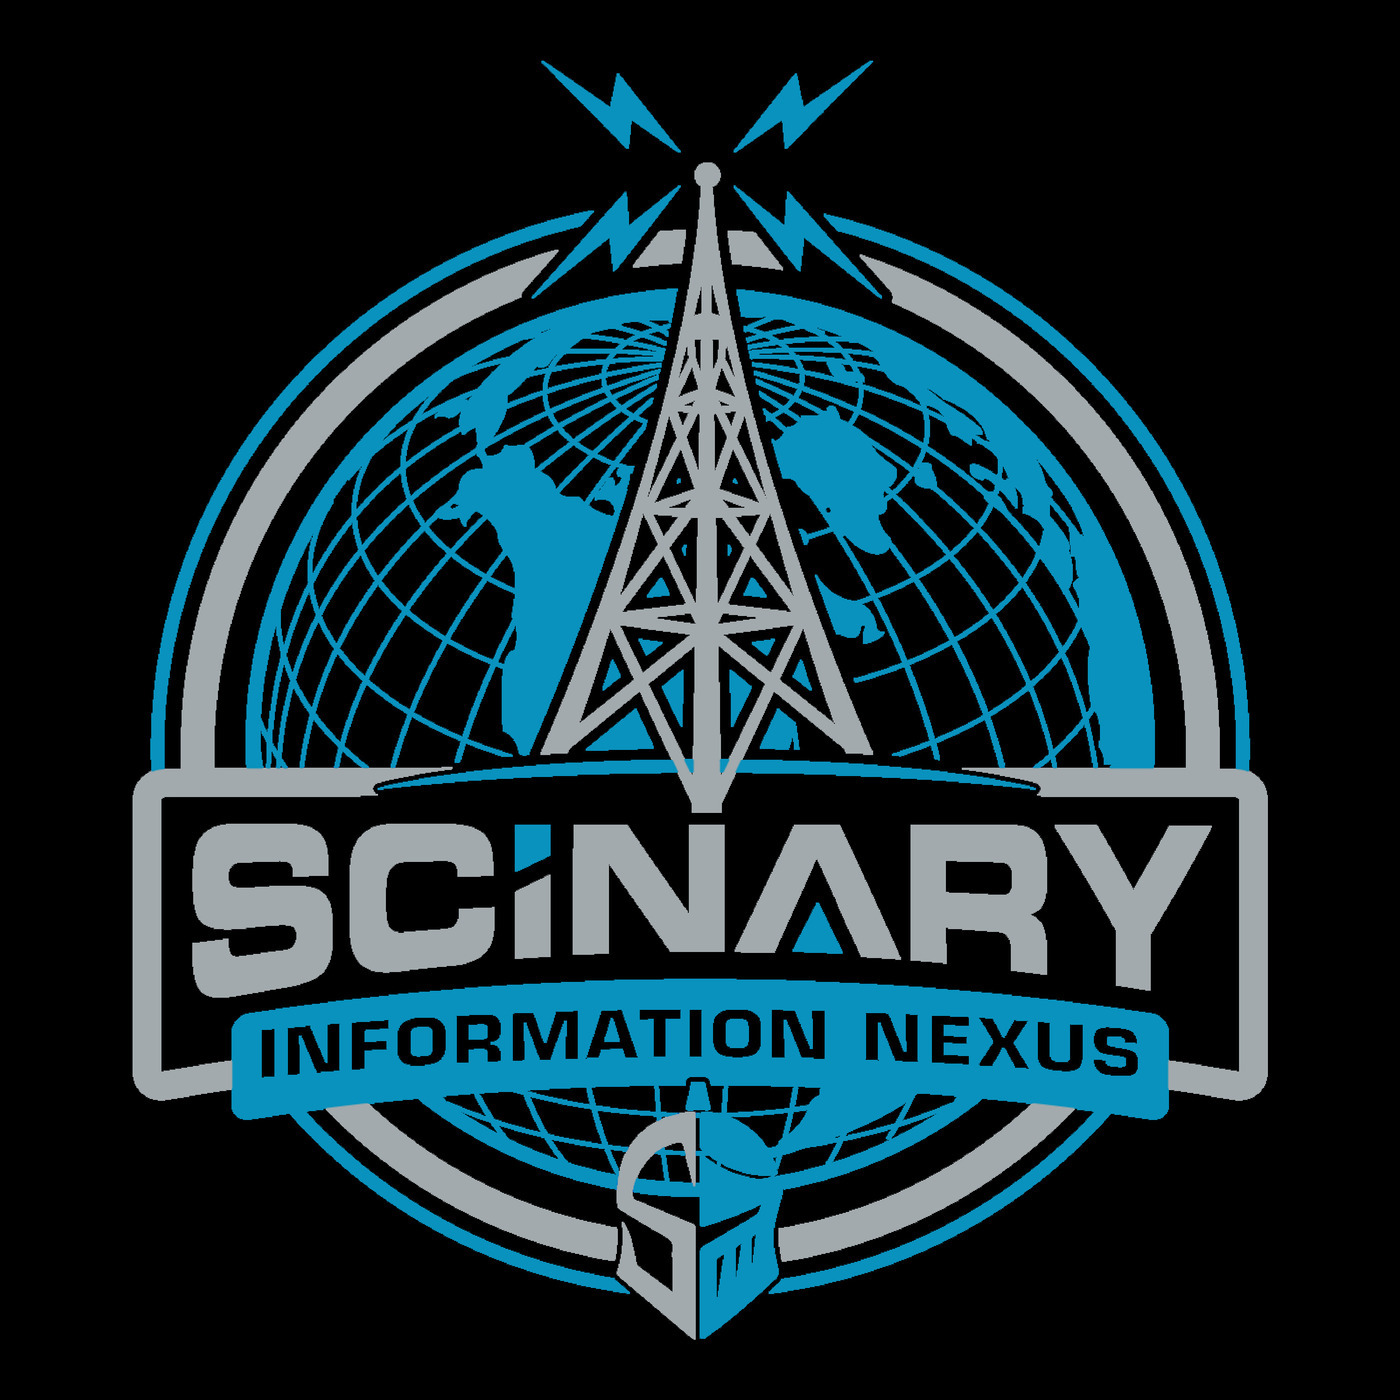 Scinary Information Nexus 2: Intern Insights